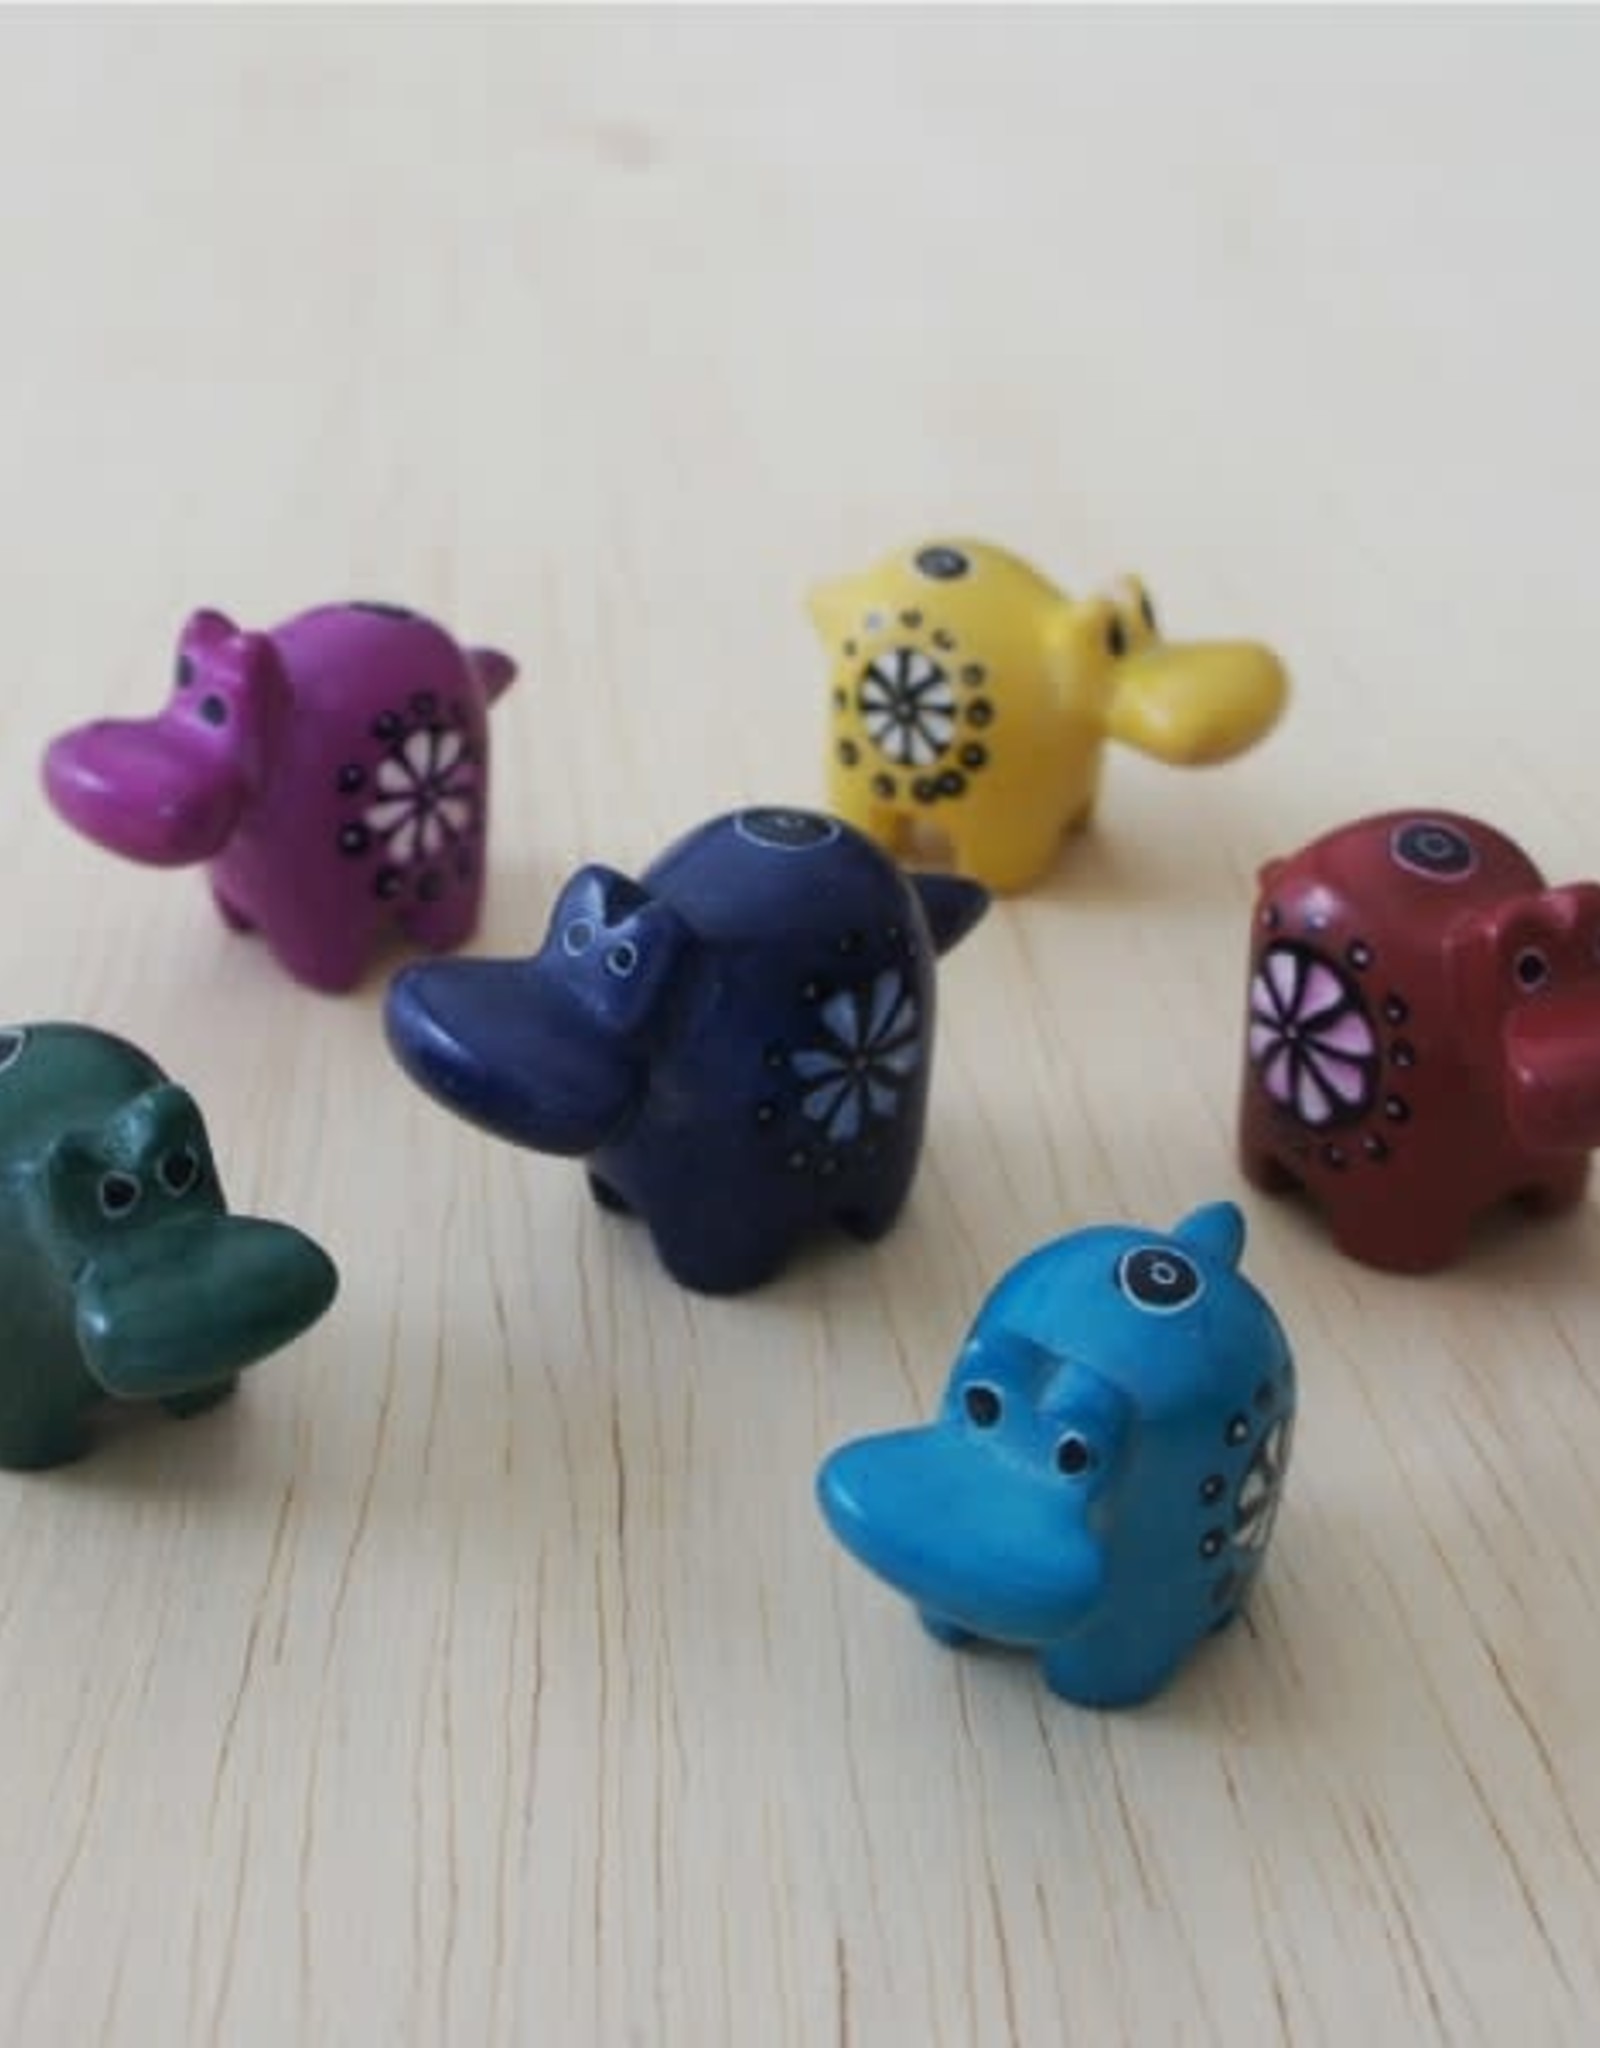 Global Crafts Tiny Hippos - Kisii Stone 1.5 - 2"